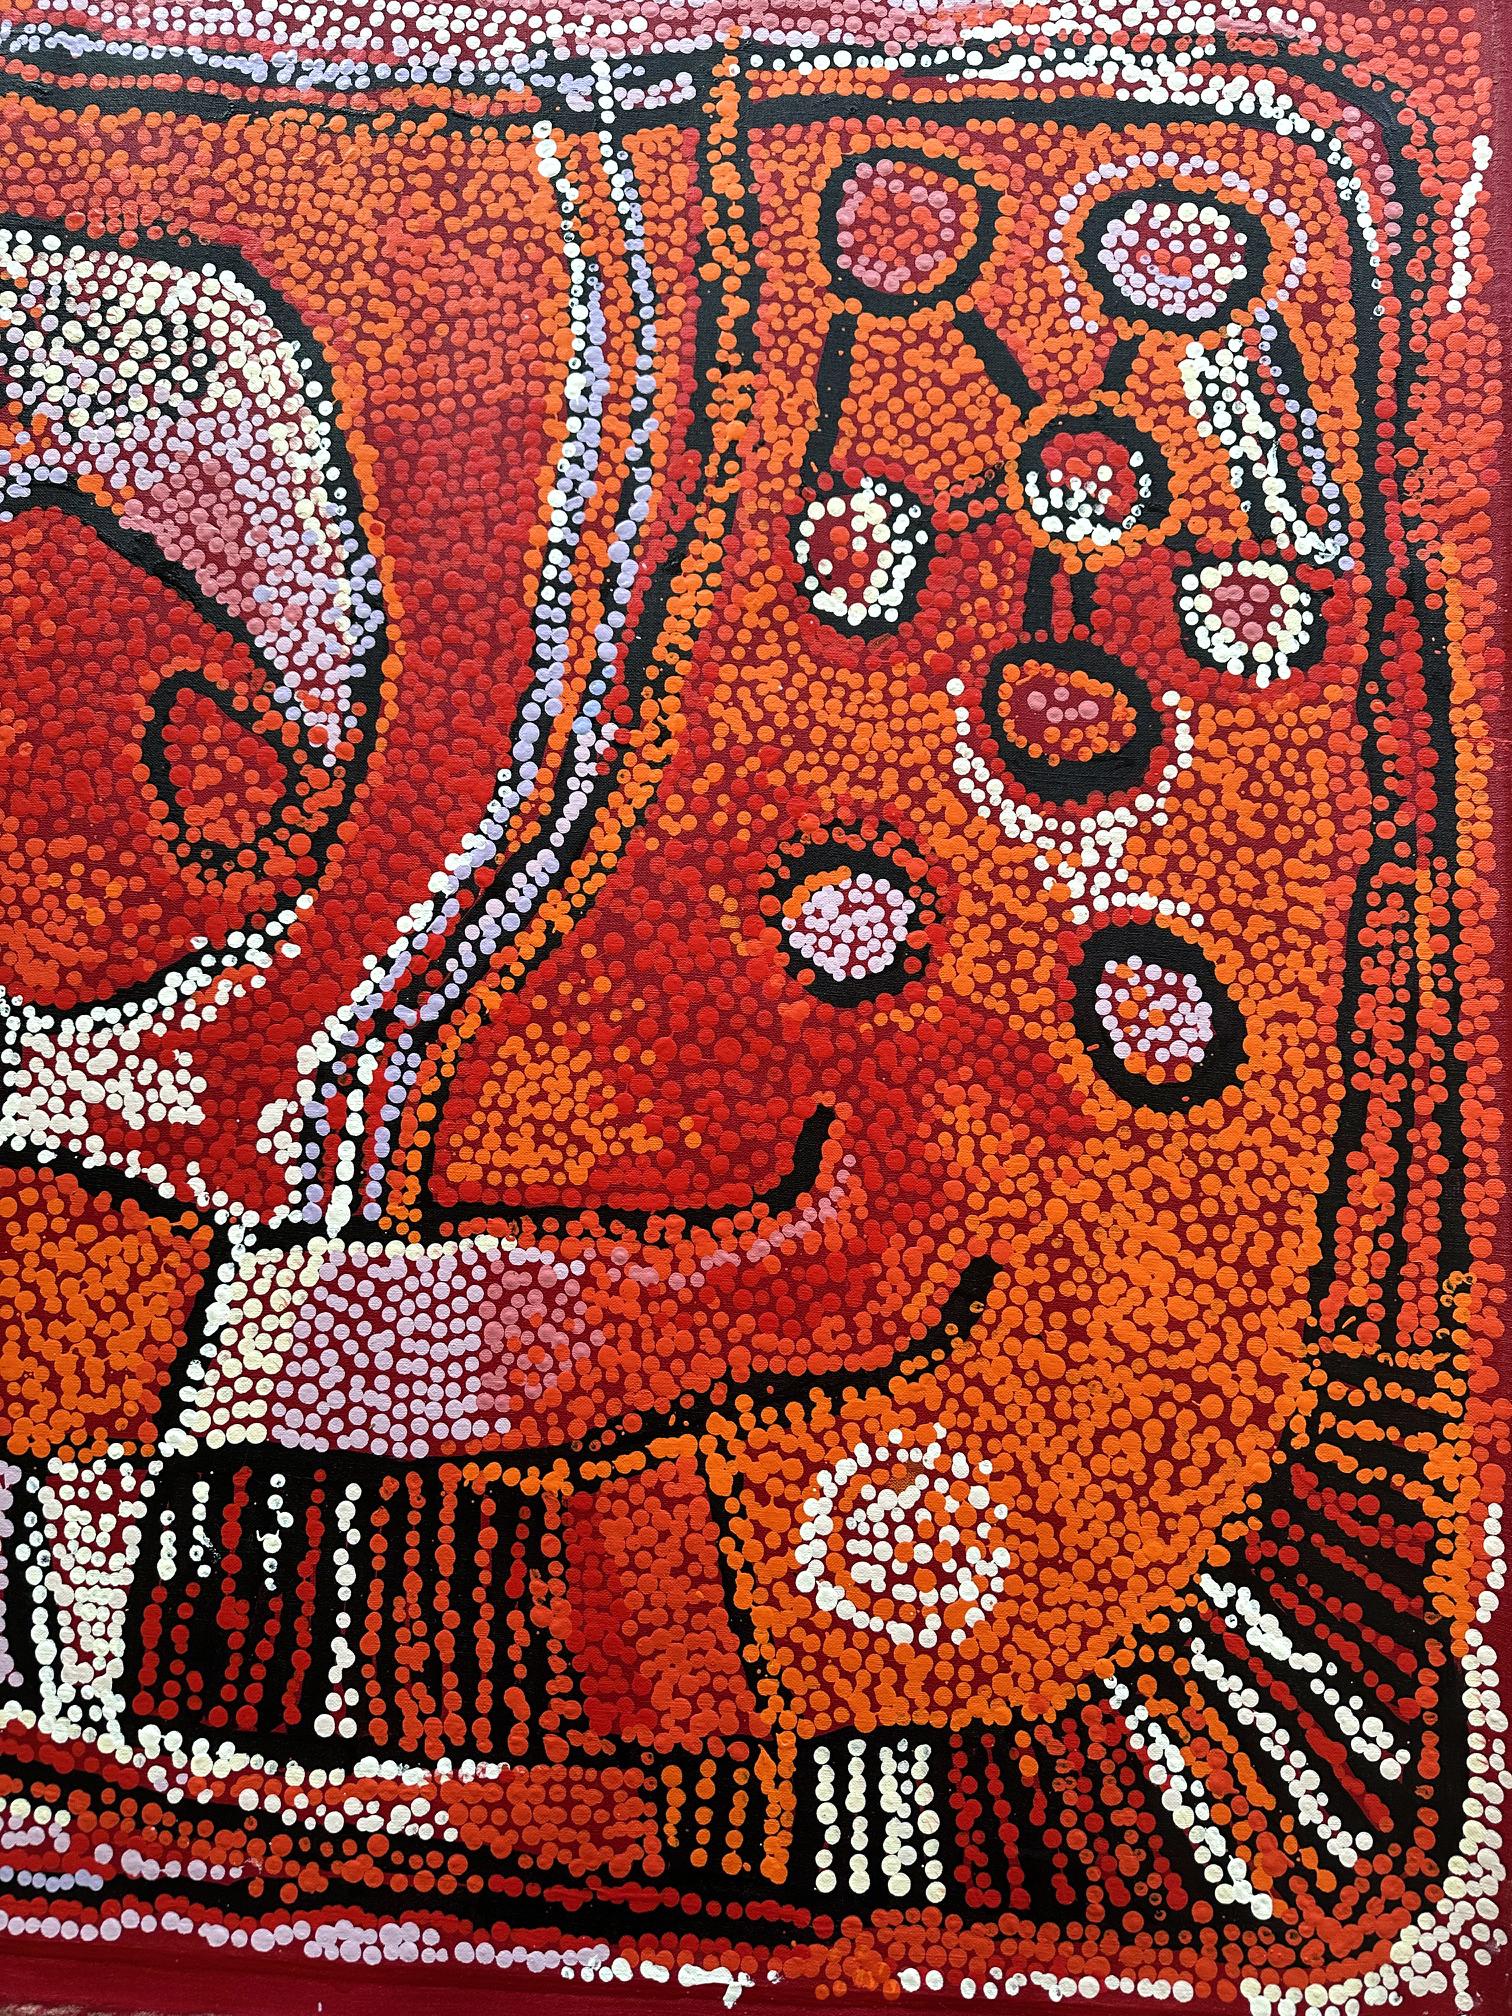 Hand-Painted Contemporary Australian Aboriginal Painting by Naata Nungurrayi